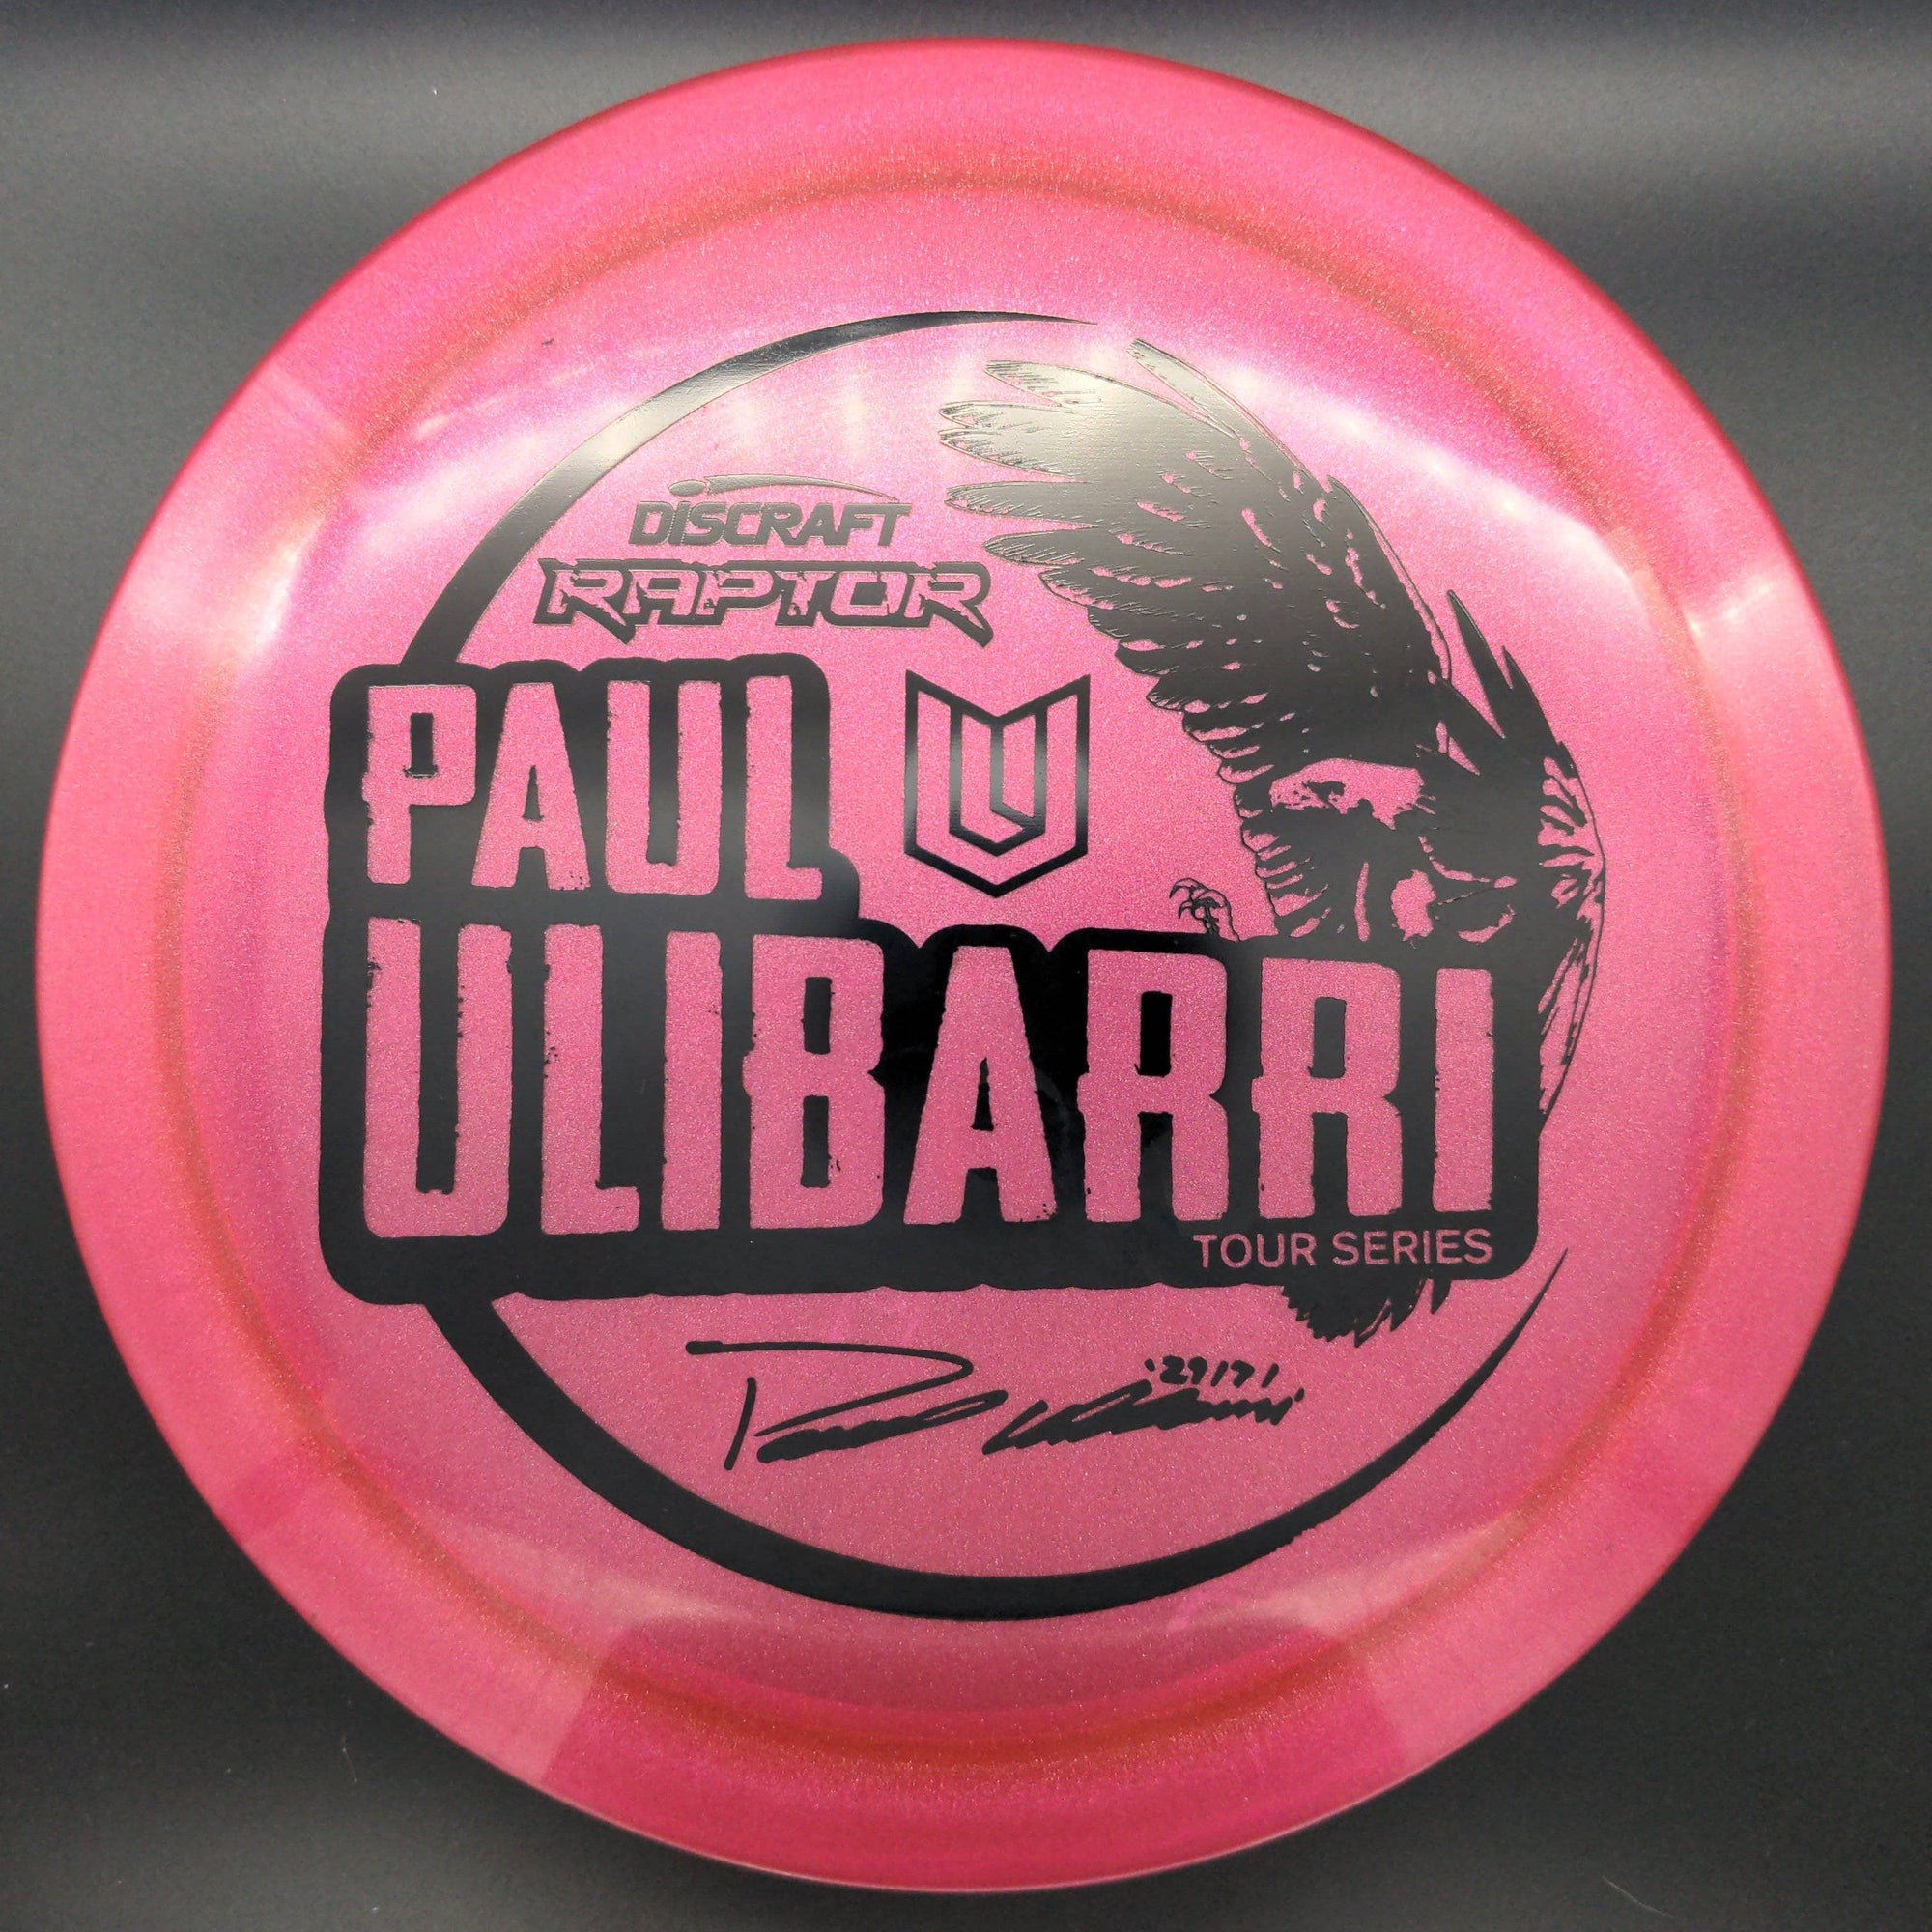 Discraft Fairway Driver 2021 Paul Ulibarri Tour Series Raptor